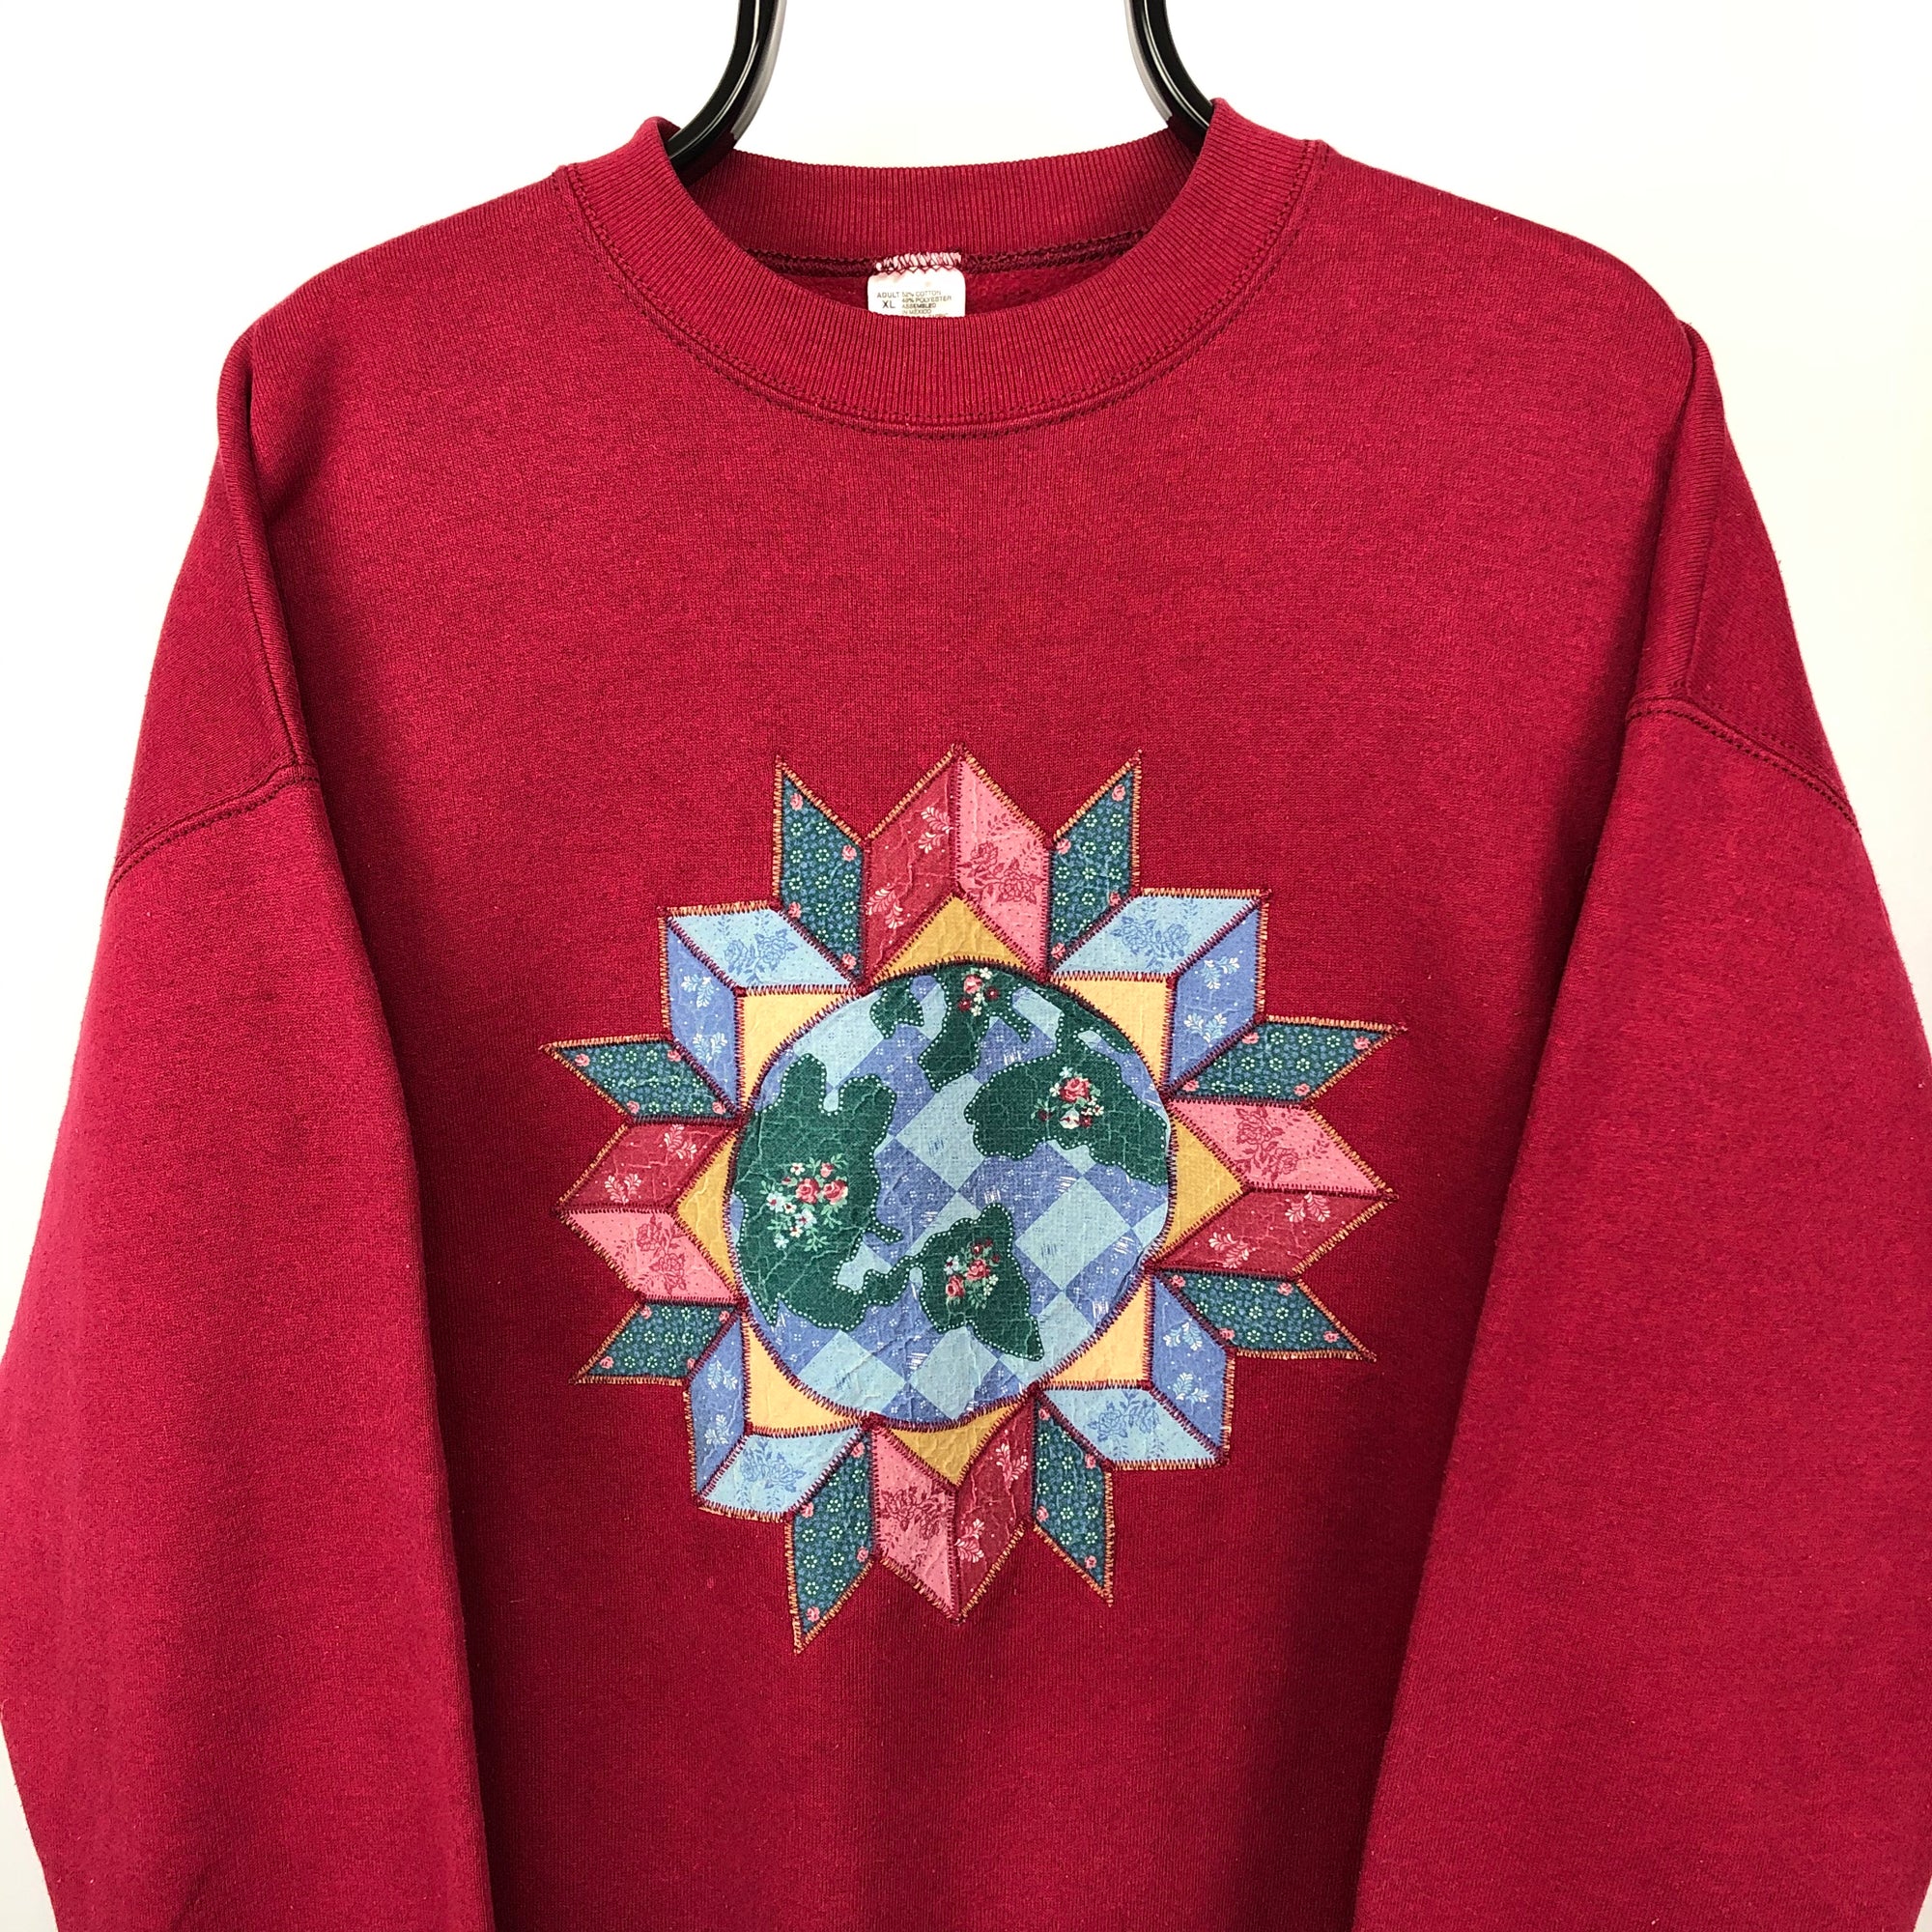 Vintage 90s Earth Patchwork Embroidery Sweatshirt - Men's Large/Women's XL